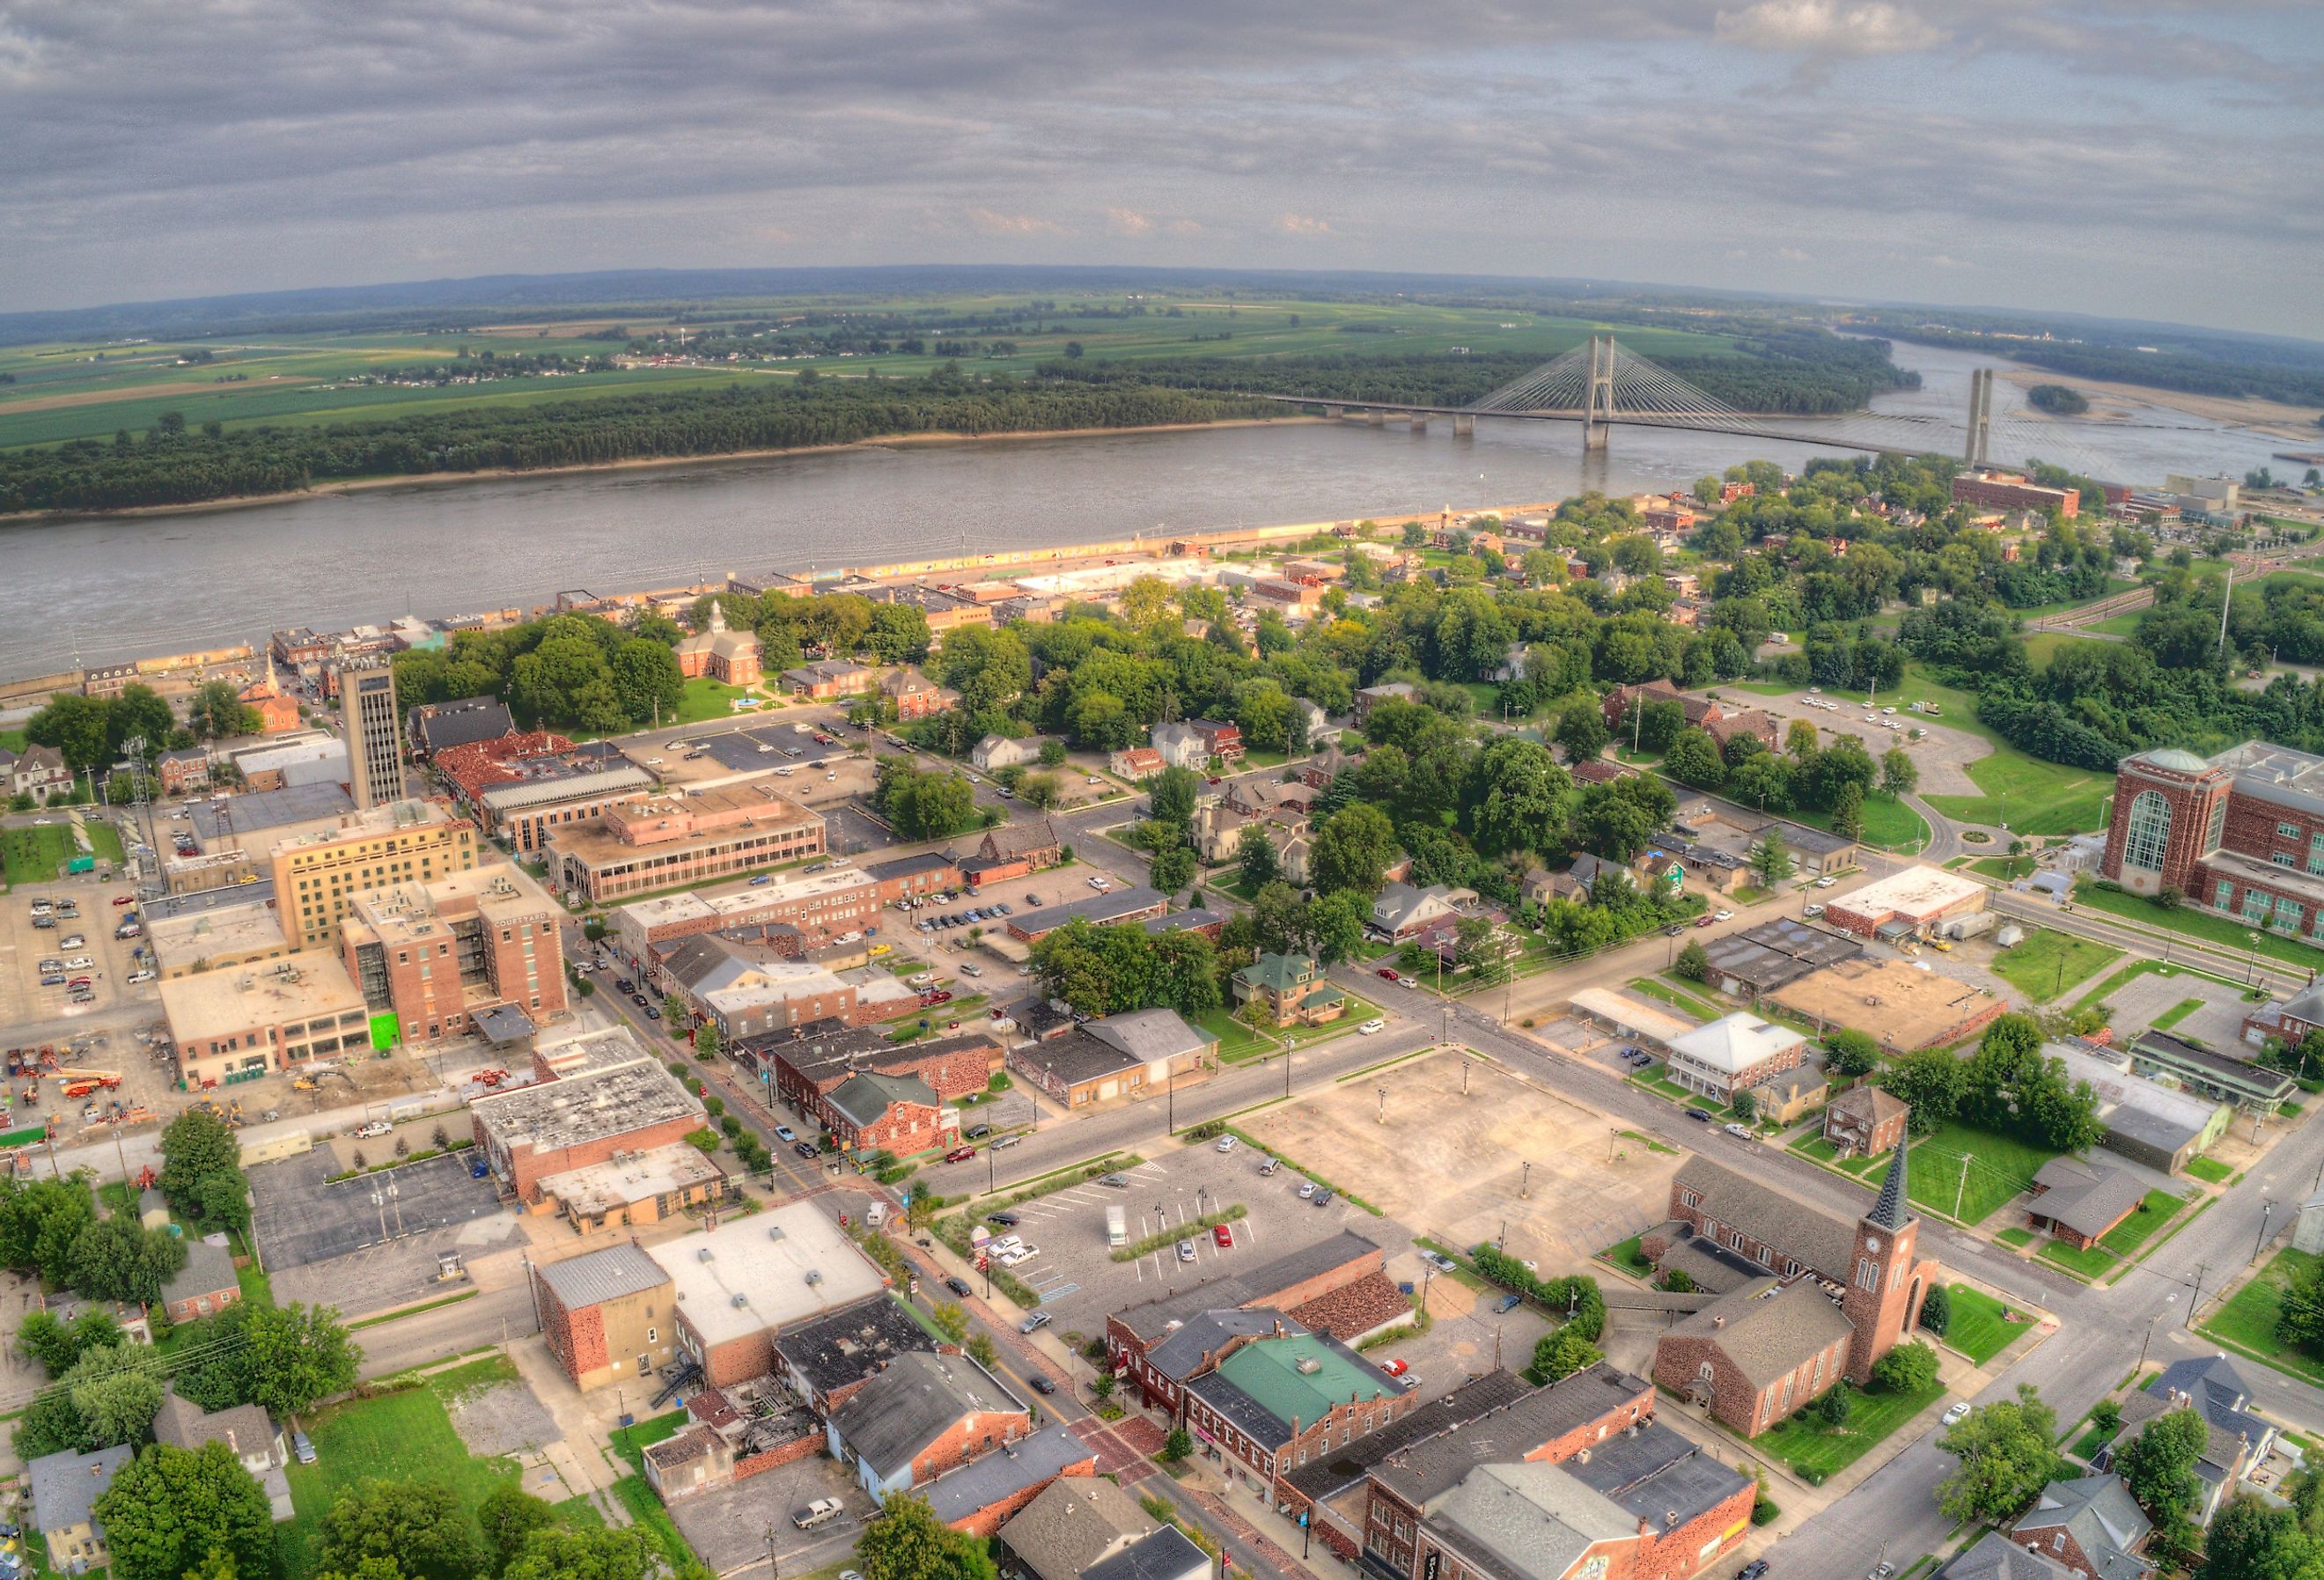 Cape Girardeau, on the Mississippi River. Image credit Jacob Boomsma via Shutterstock